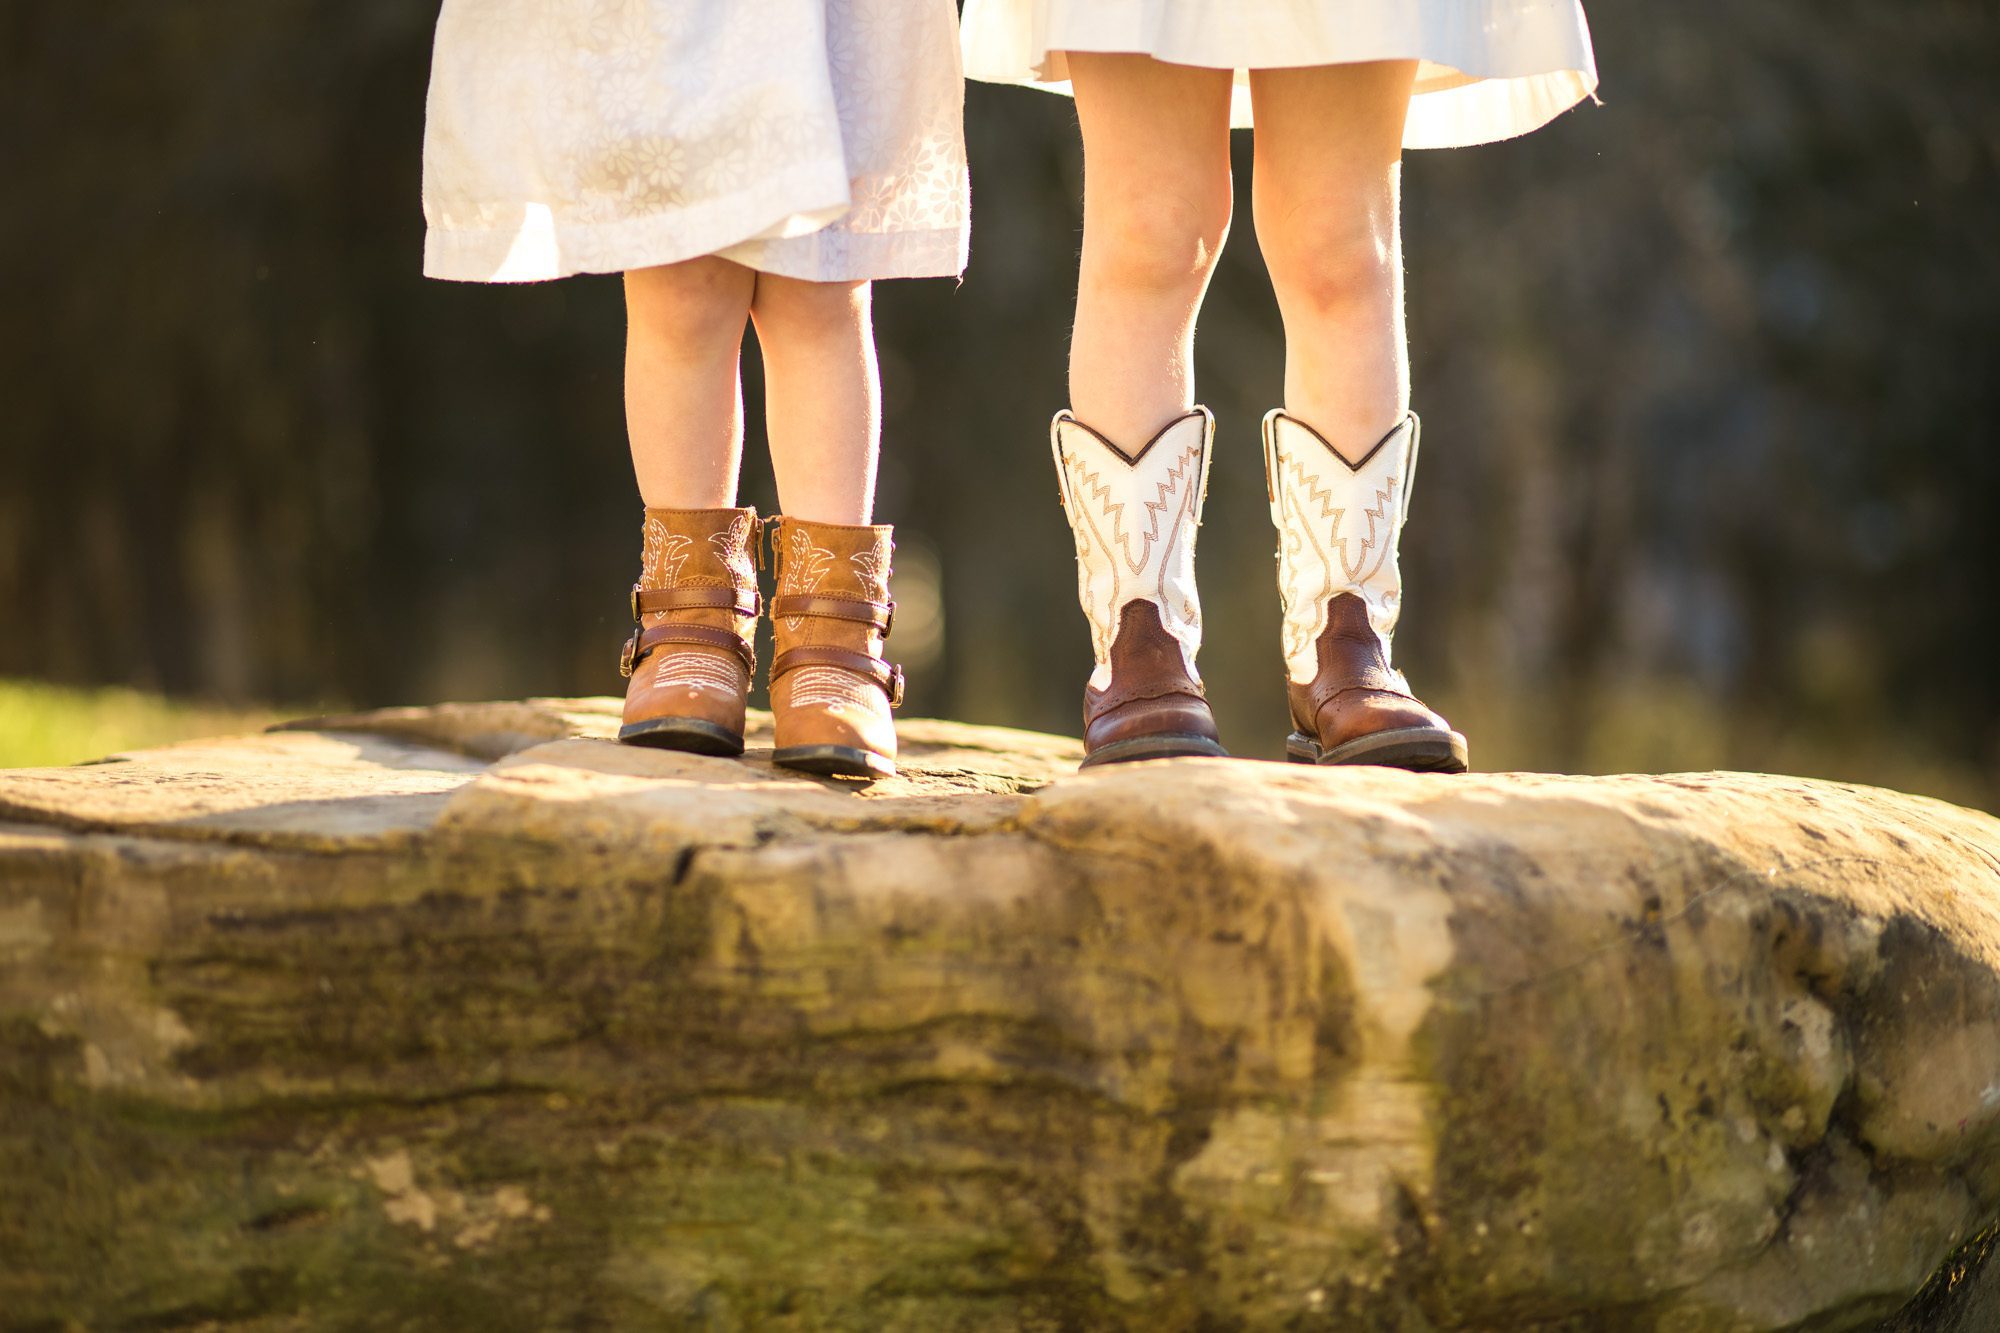 Children's wardrobe ideas for family photos cowboy boots